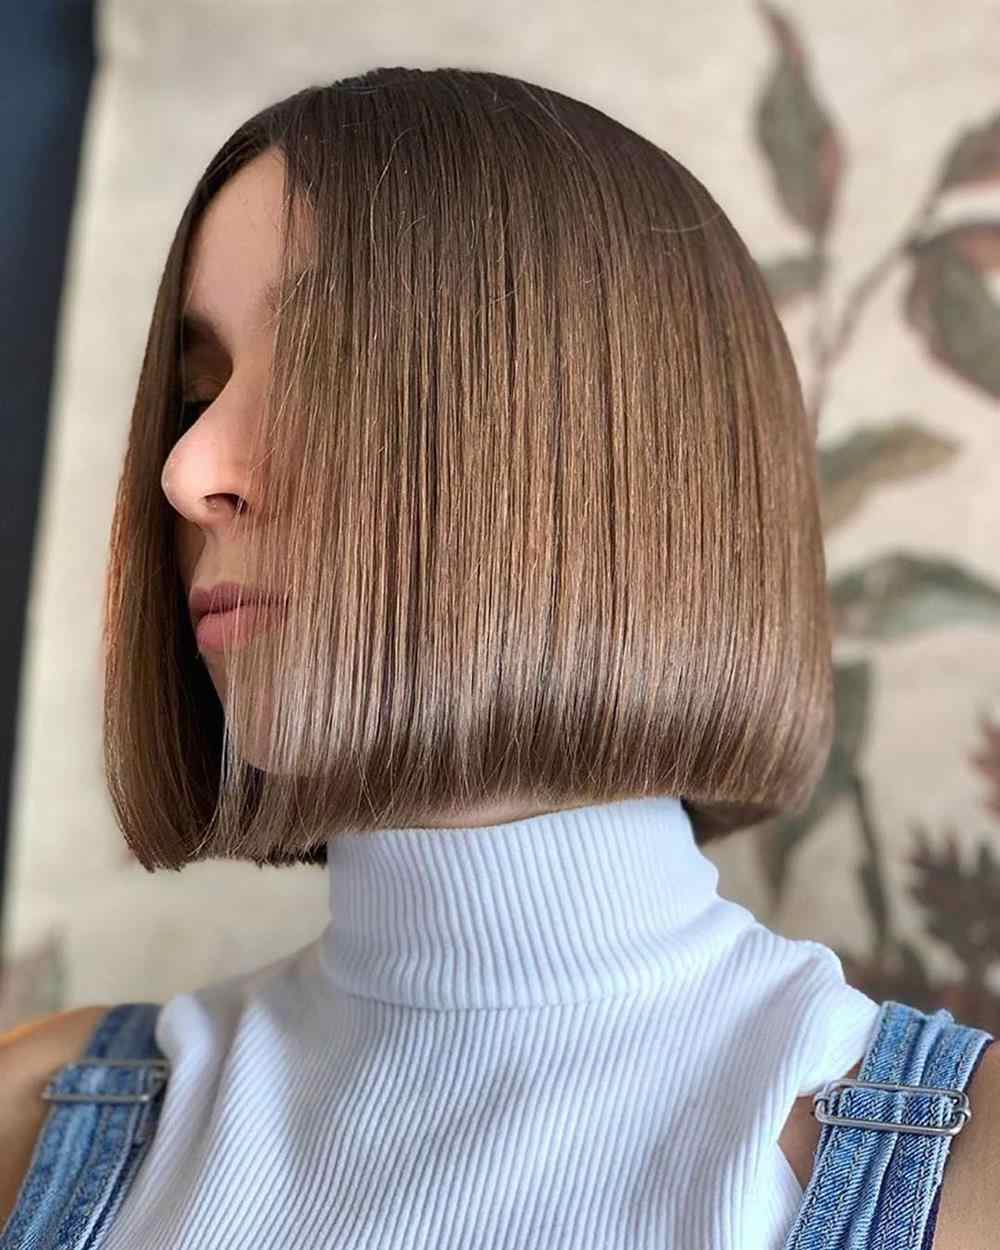 2021 female haircut trends